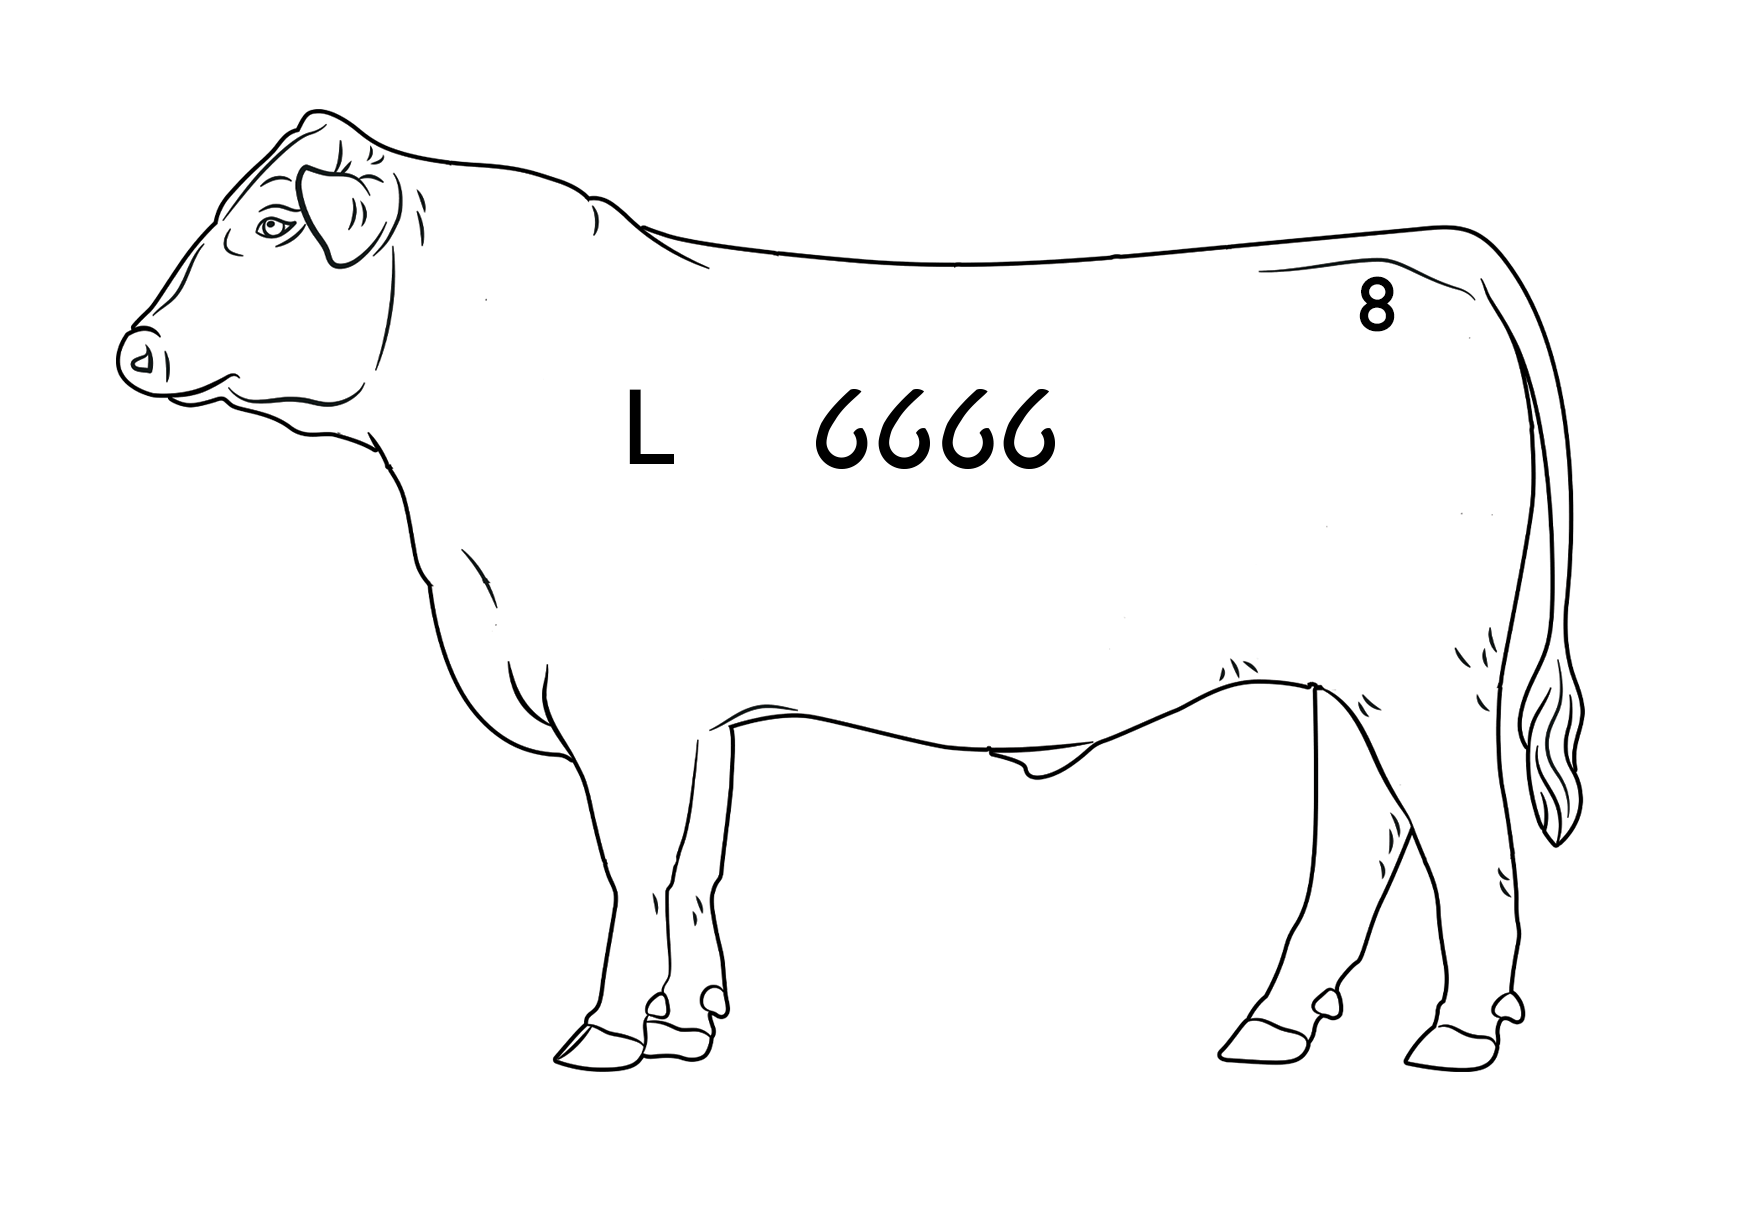 6666 Angus Brand Diagram